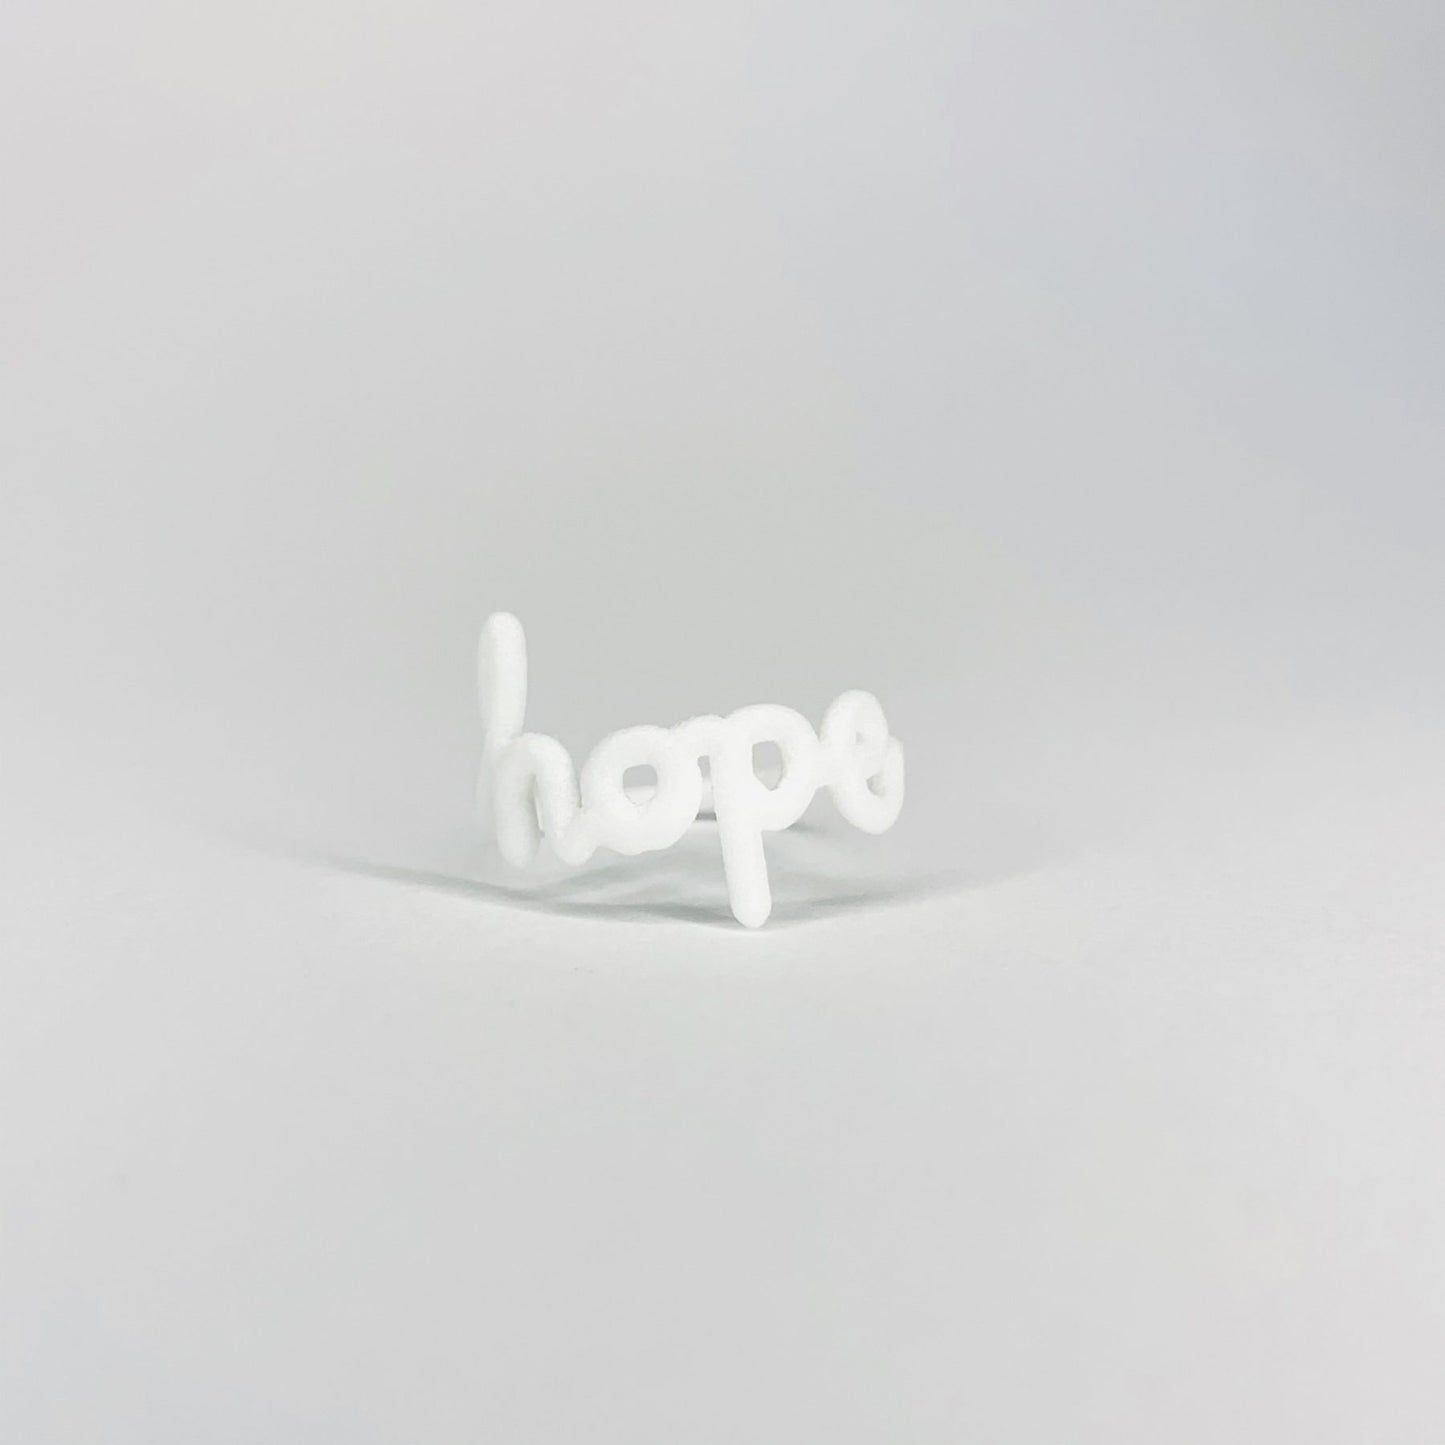 Zoe Sherwood 'Hope' Ring in white